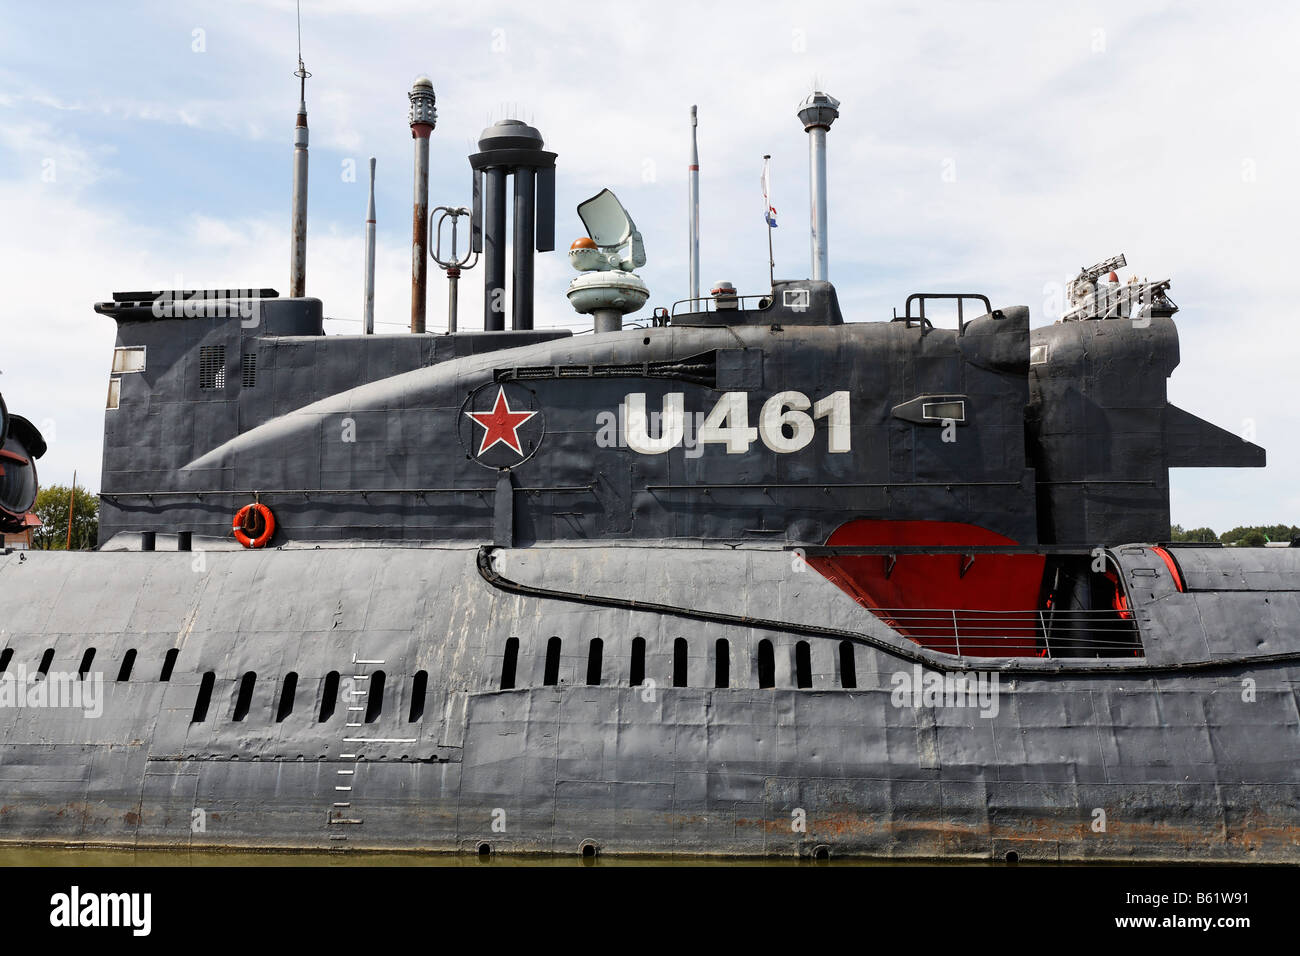 Peenemuende Maritine Museum, smantellata sottomarino russo U461, isola di Usedom, Meclemburgo-Pomerania, Mar Baltico, G Foto Stock